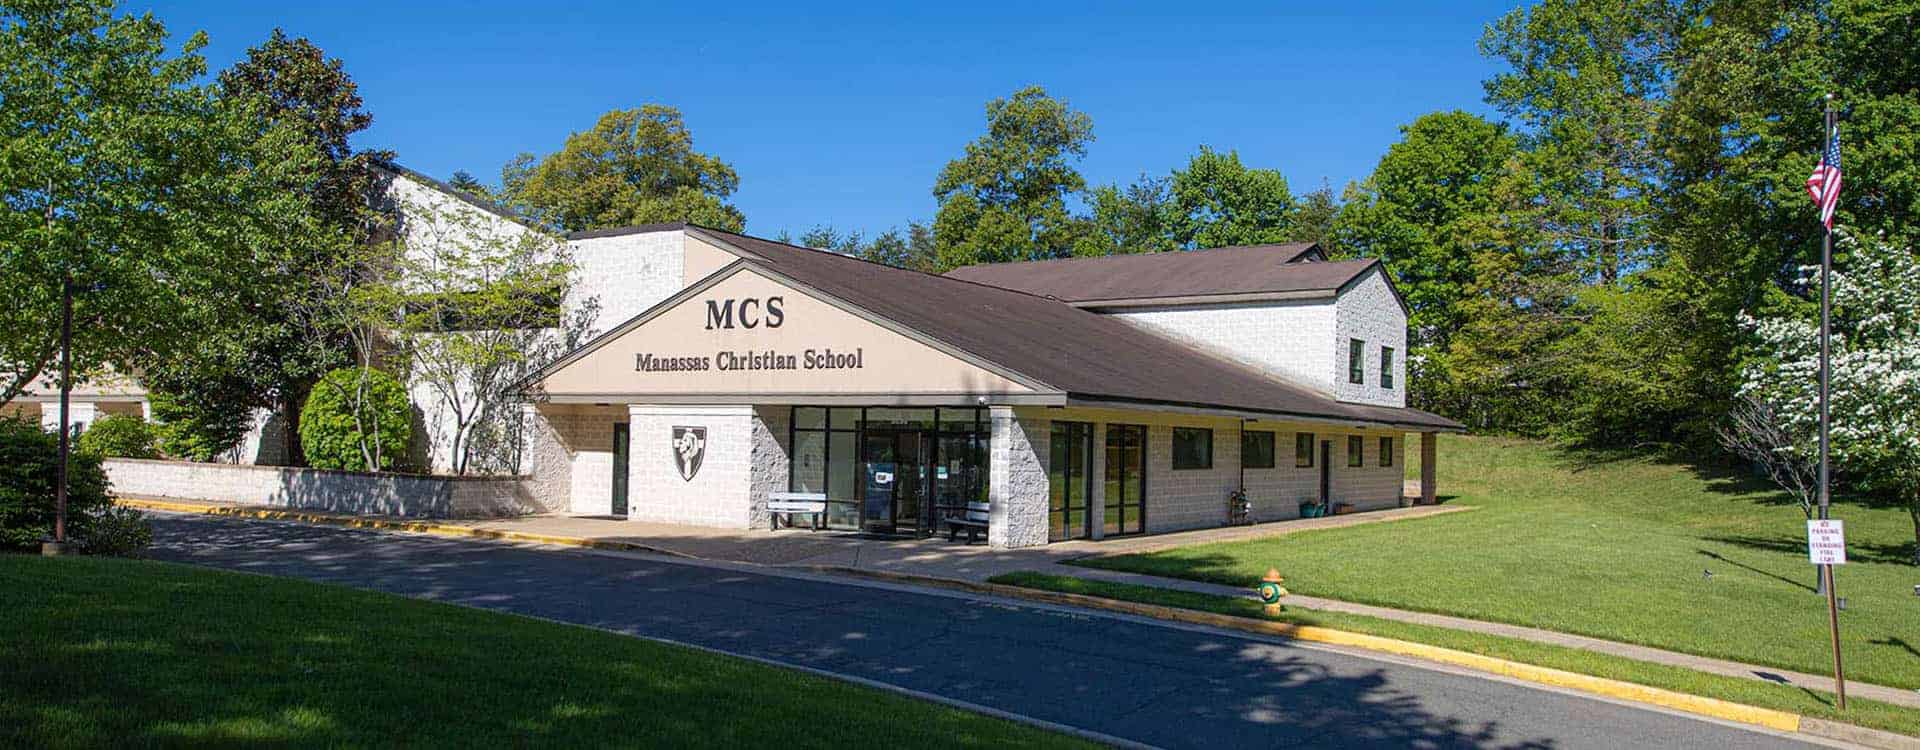 Manassas Virginia Schools